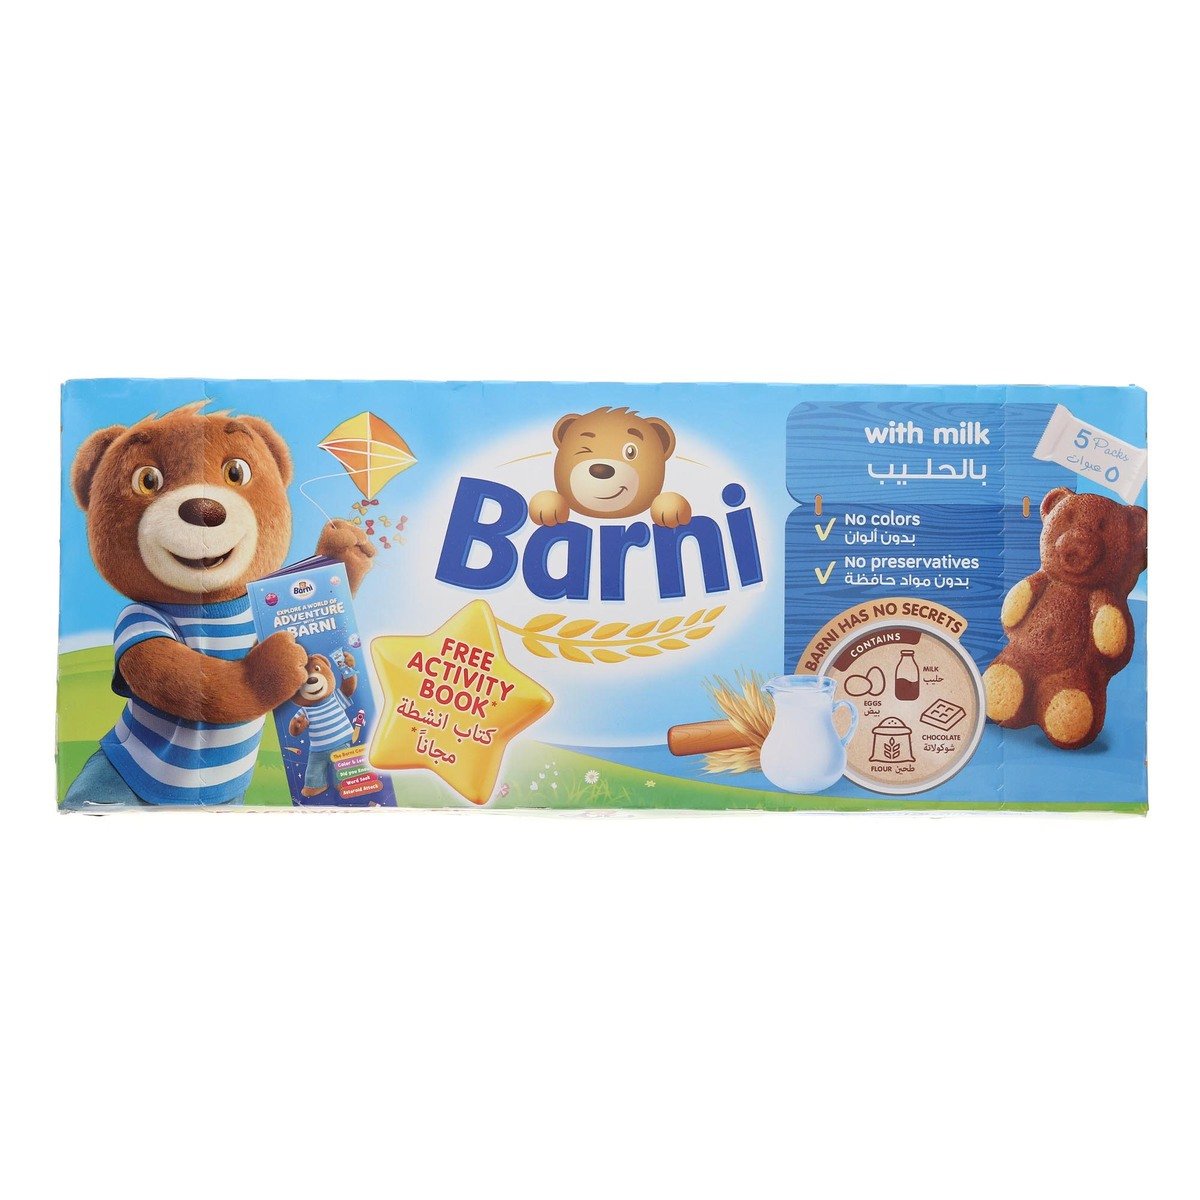 Barni Cake with Milk 5 pcs + Offer